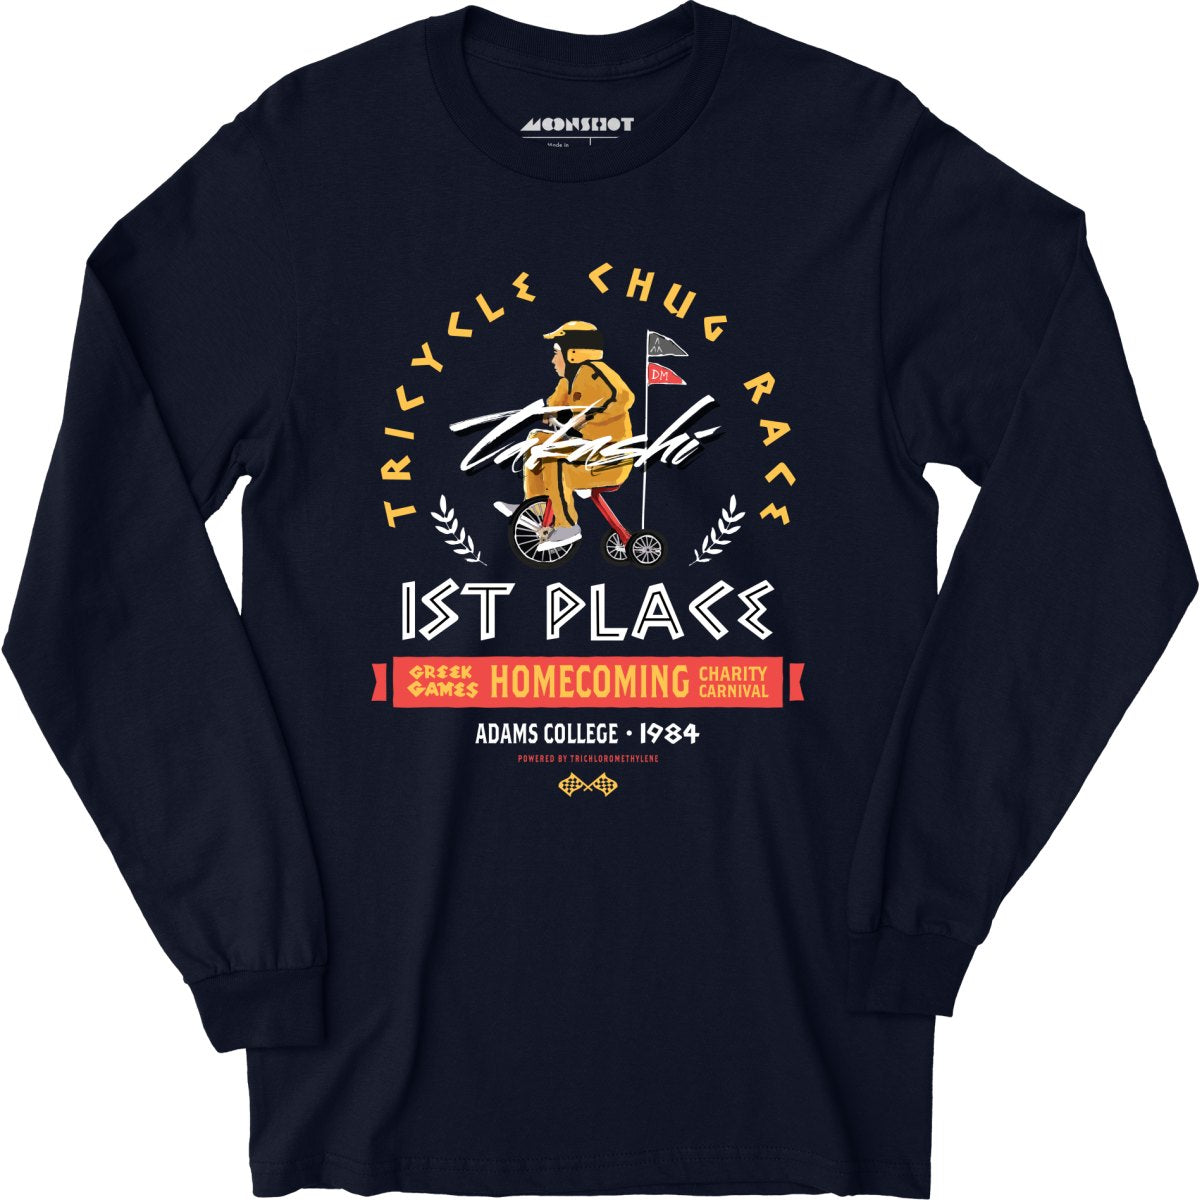 Takashi Tricycle Chug Race - Long Sleeve T-Shirt